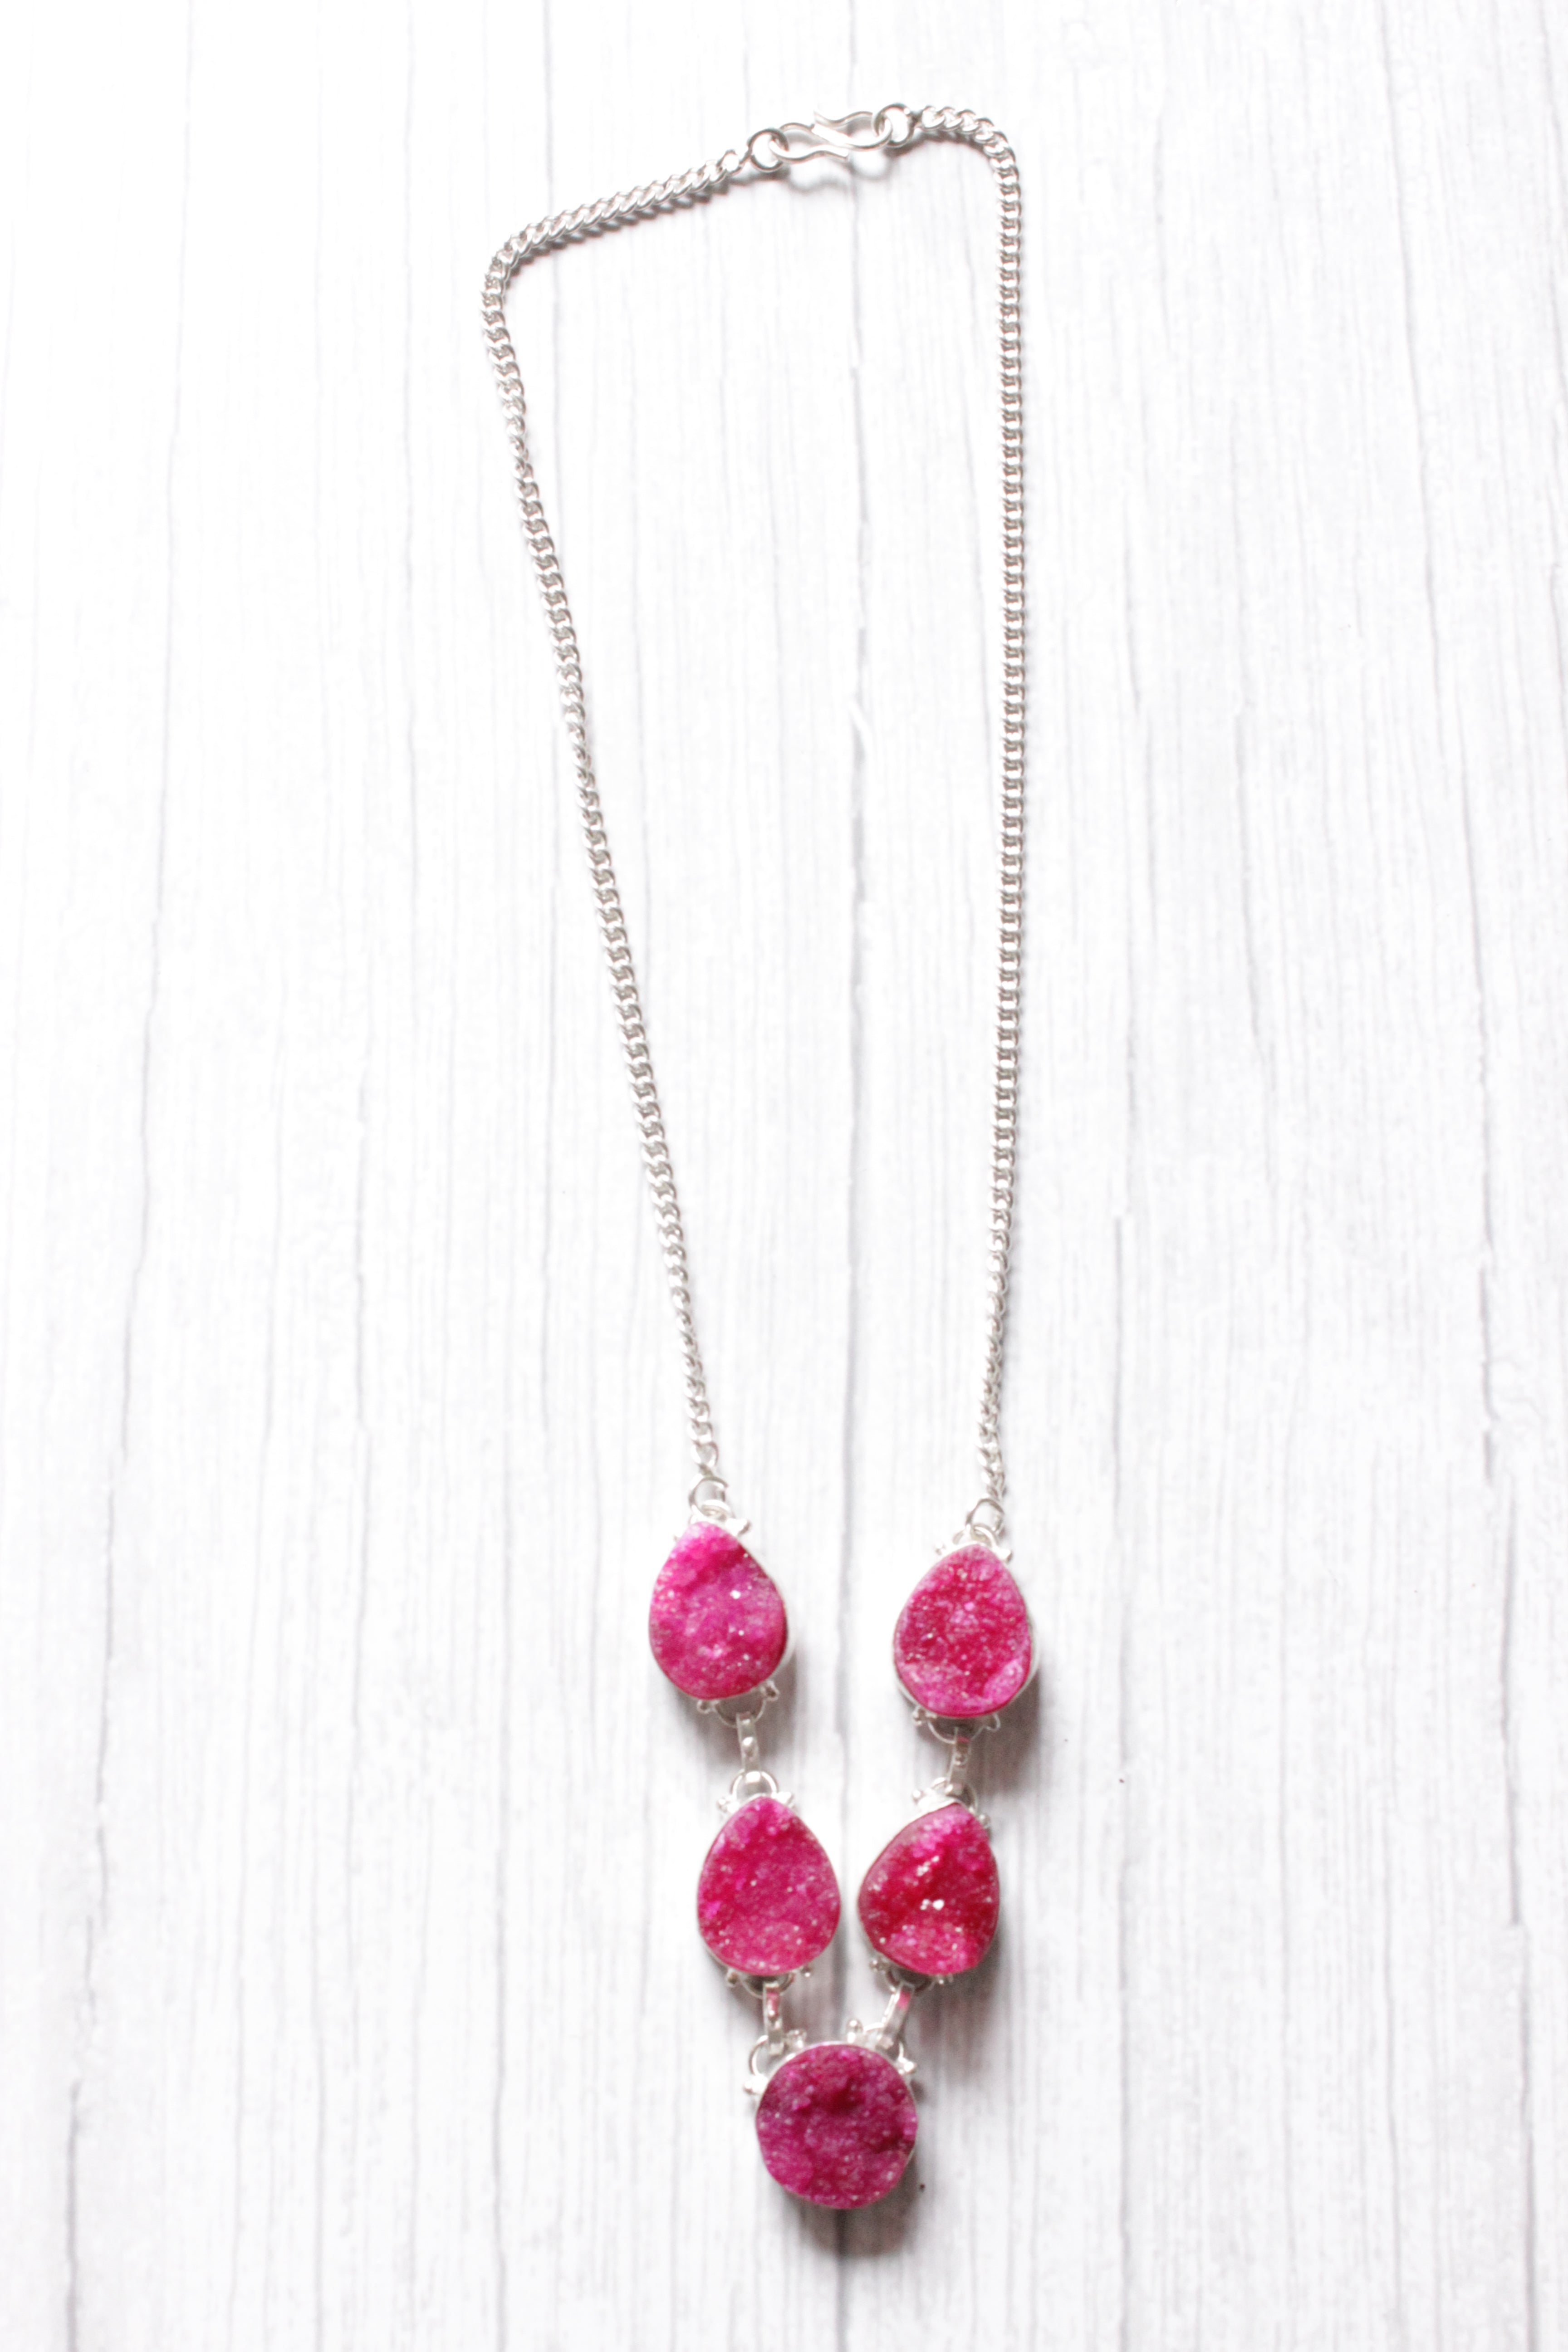 Pink Sugar Druzy Natural Gemstone Embedded Silver Plated Necklace